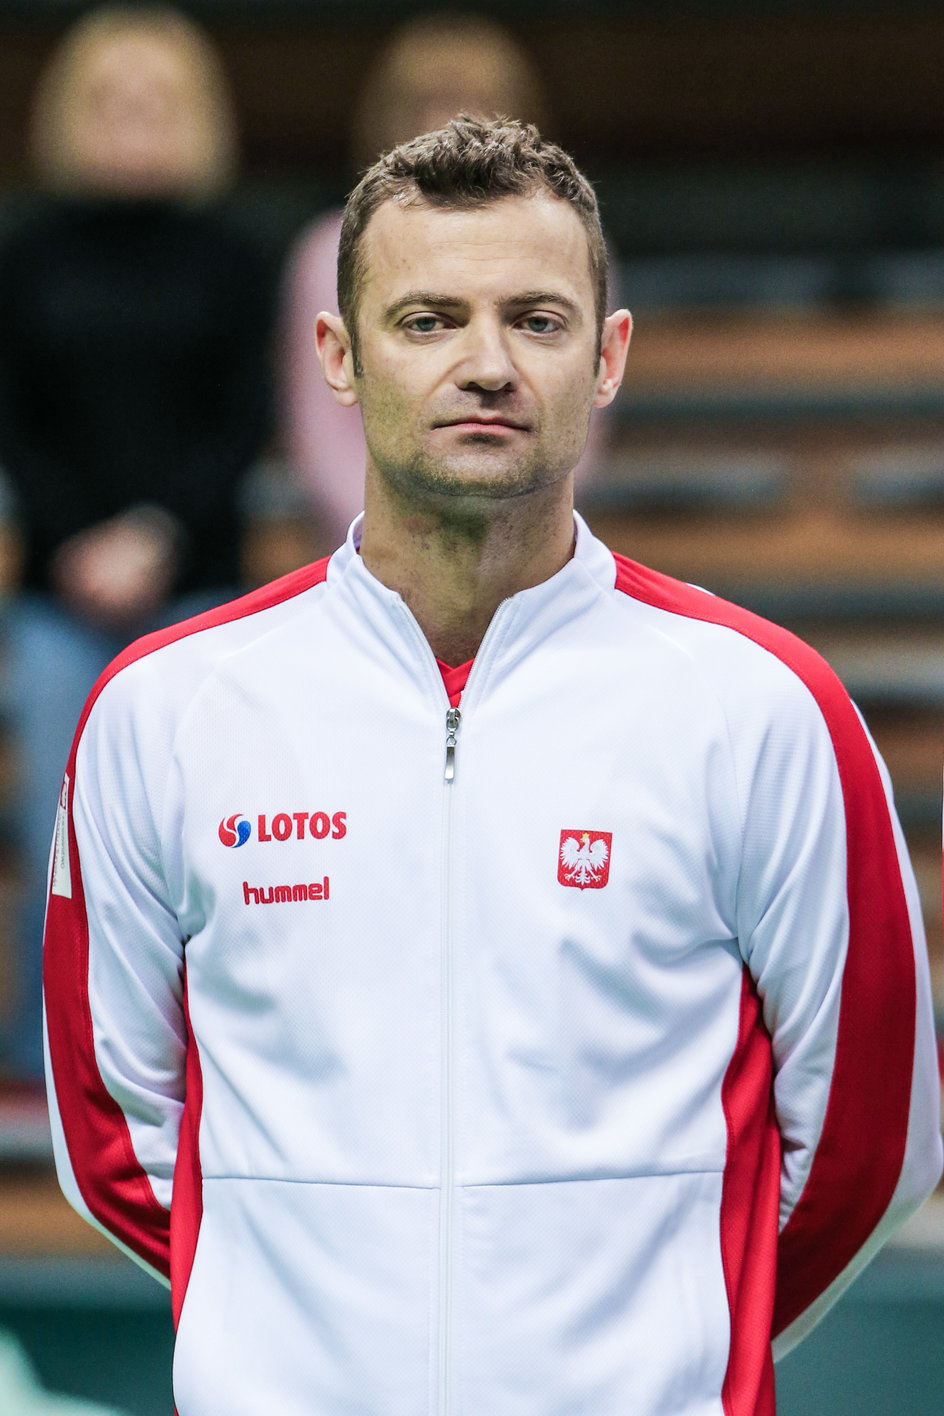 Mariusz Fyrstenberg